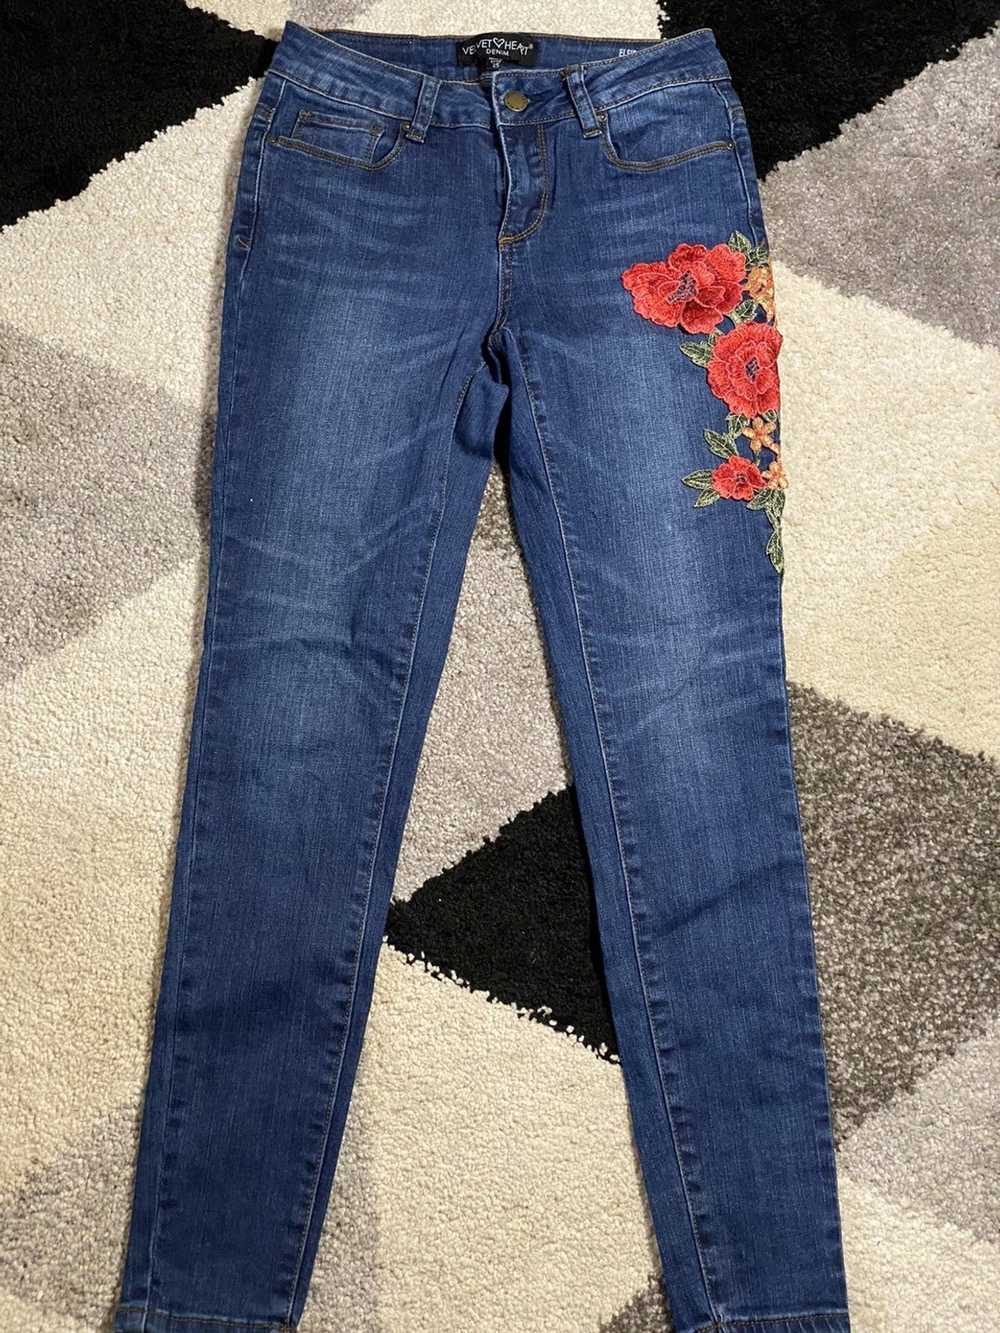 Streetwear Floral jeans size 25 - image 1